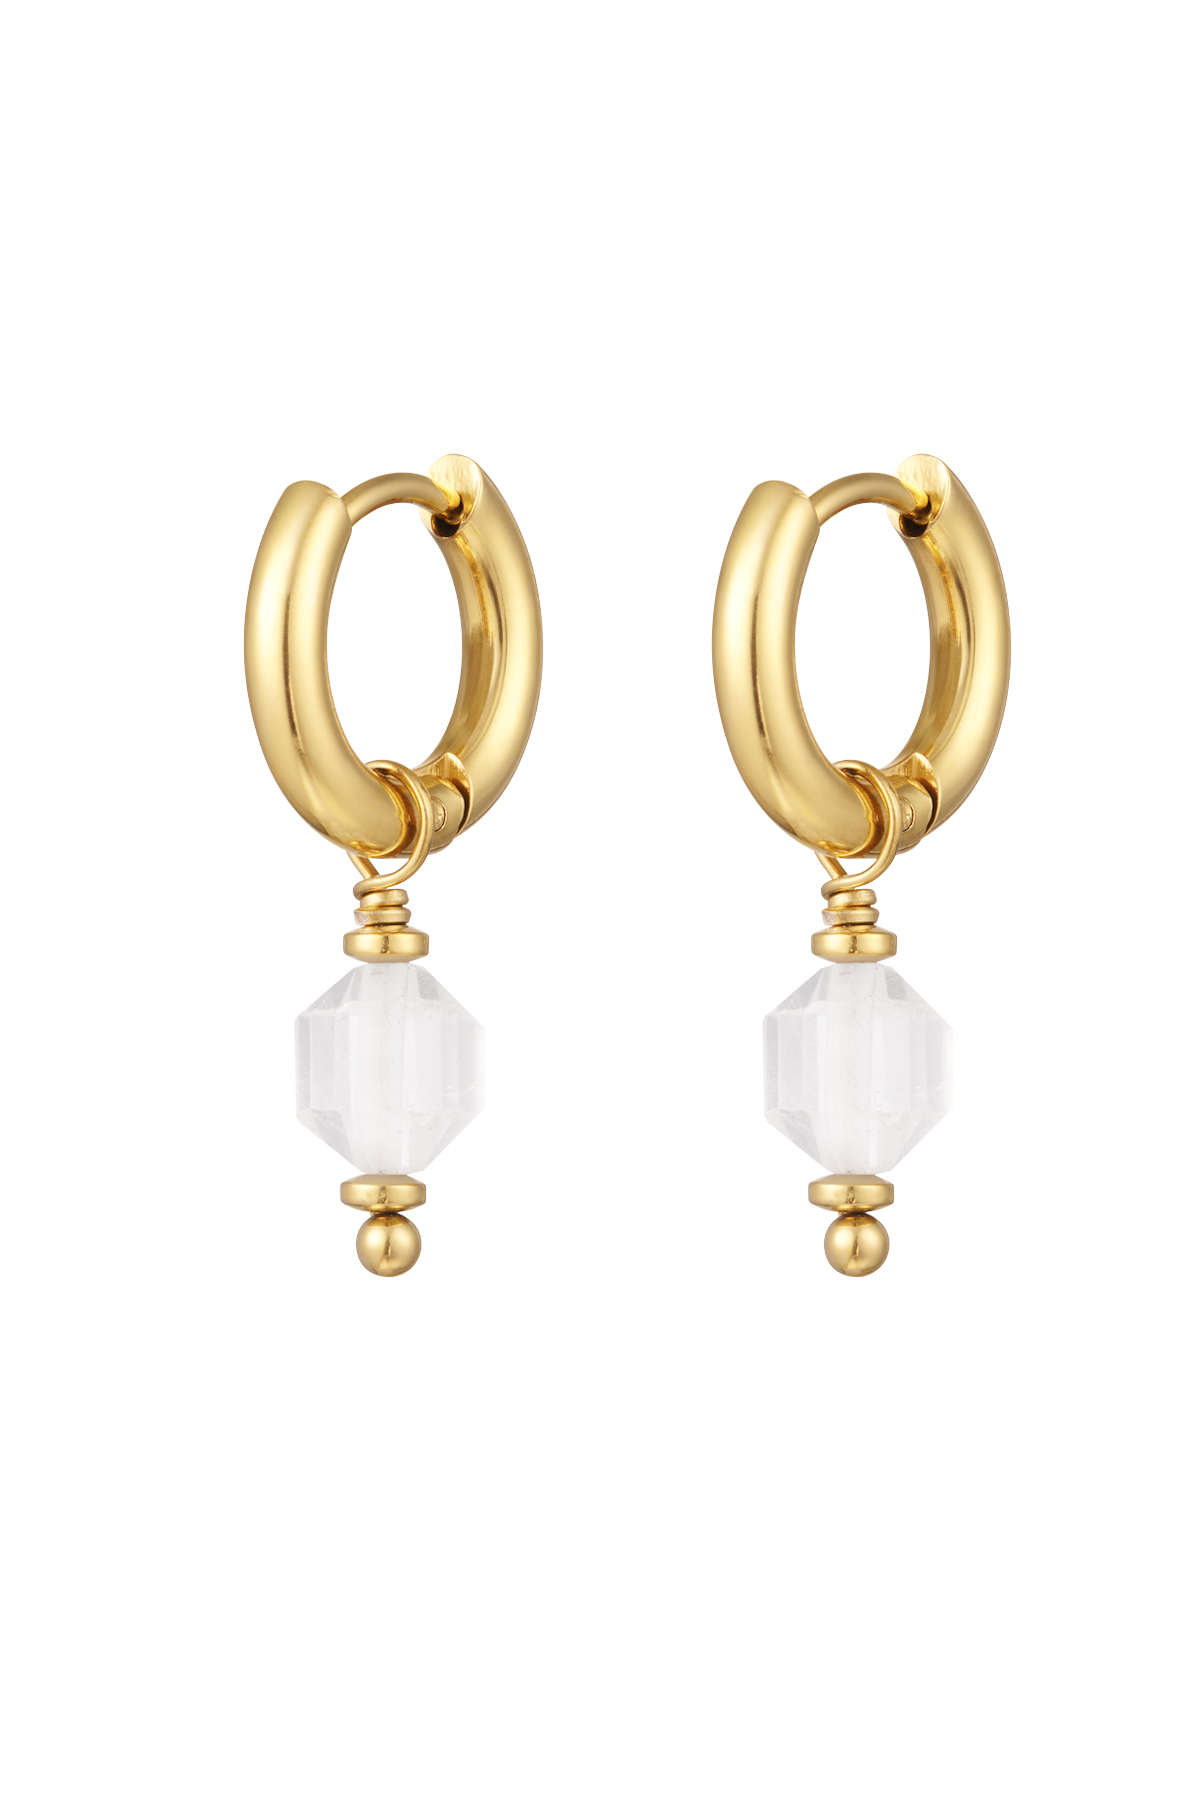 April stone earrings - gold/white h5 